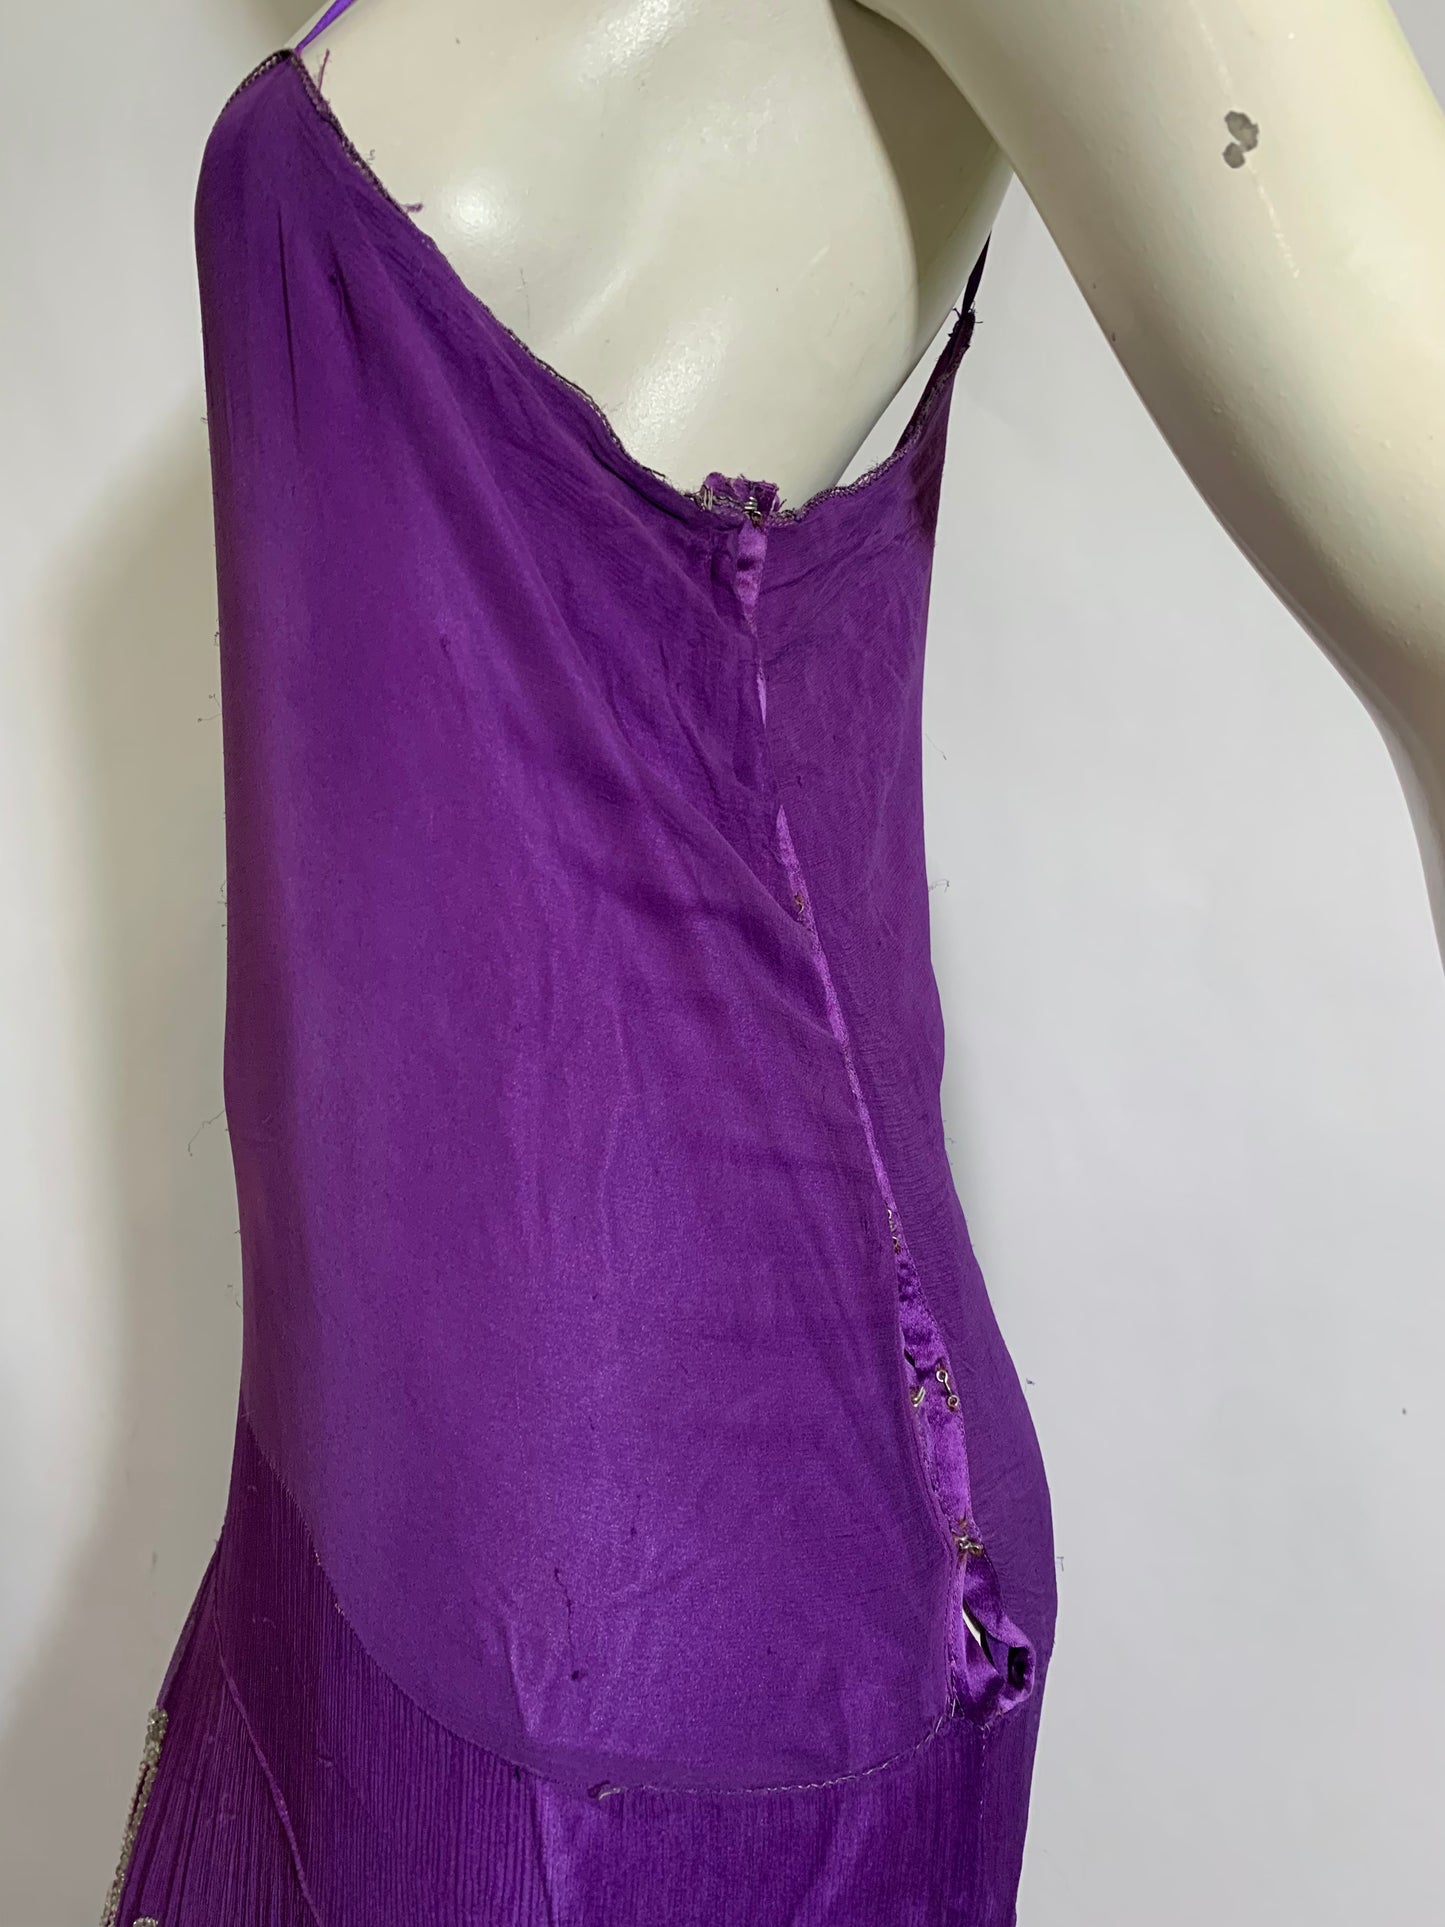 Vivid Violet Two Piece Beaded Silk Chiffon Dress circa 1920s